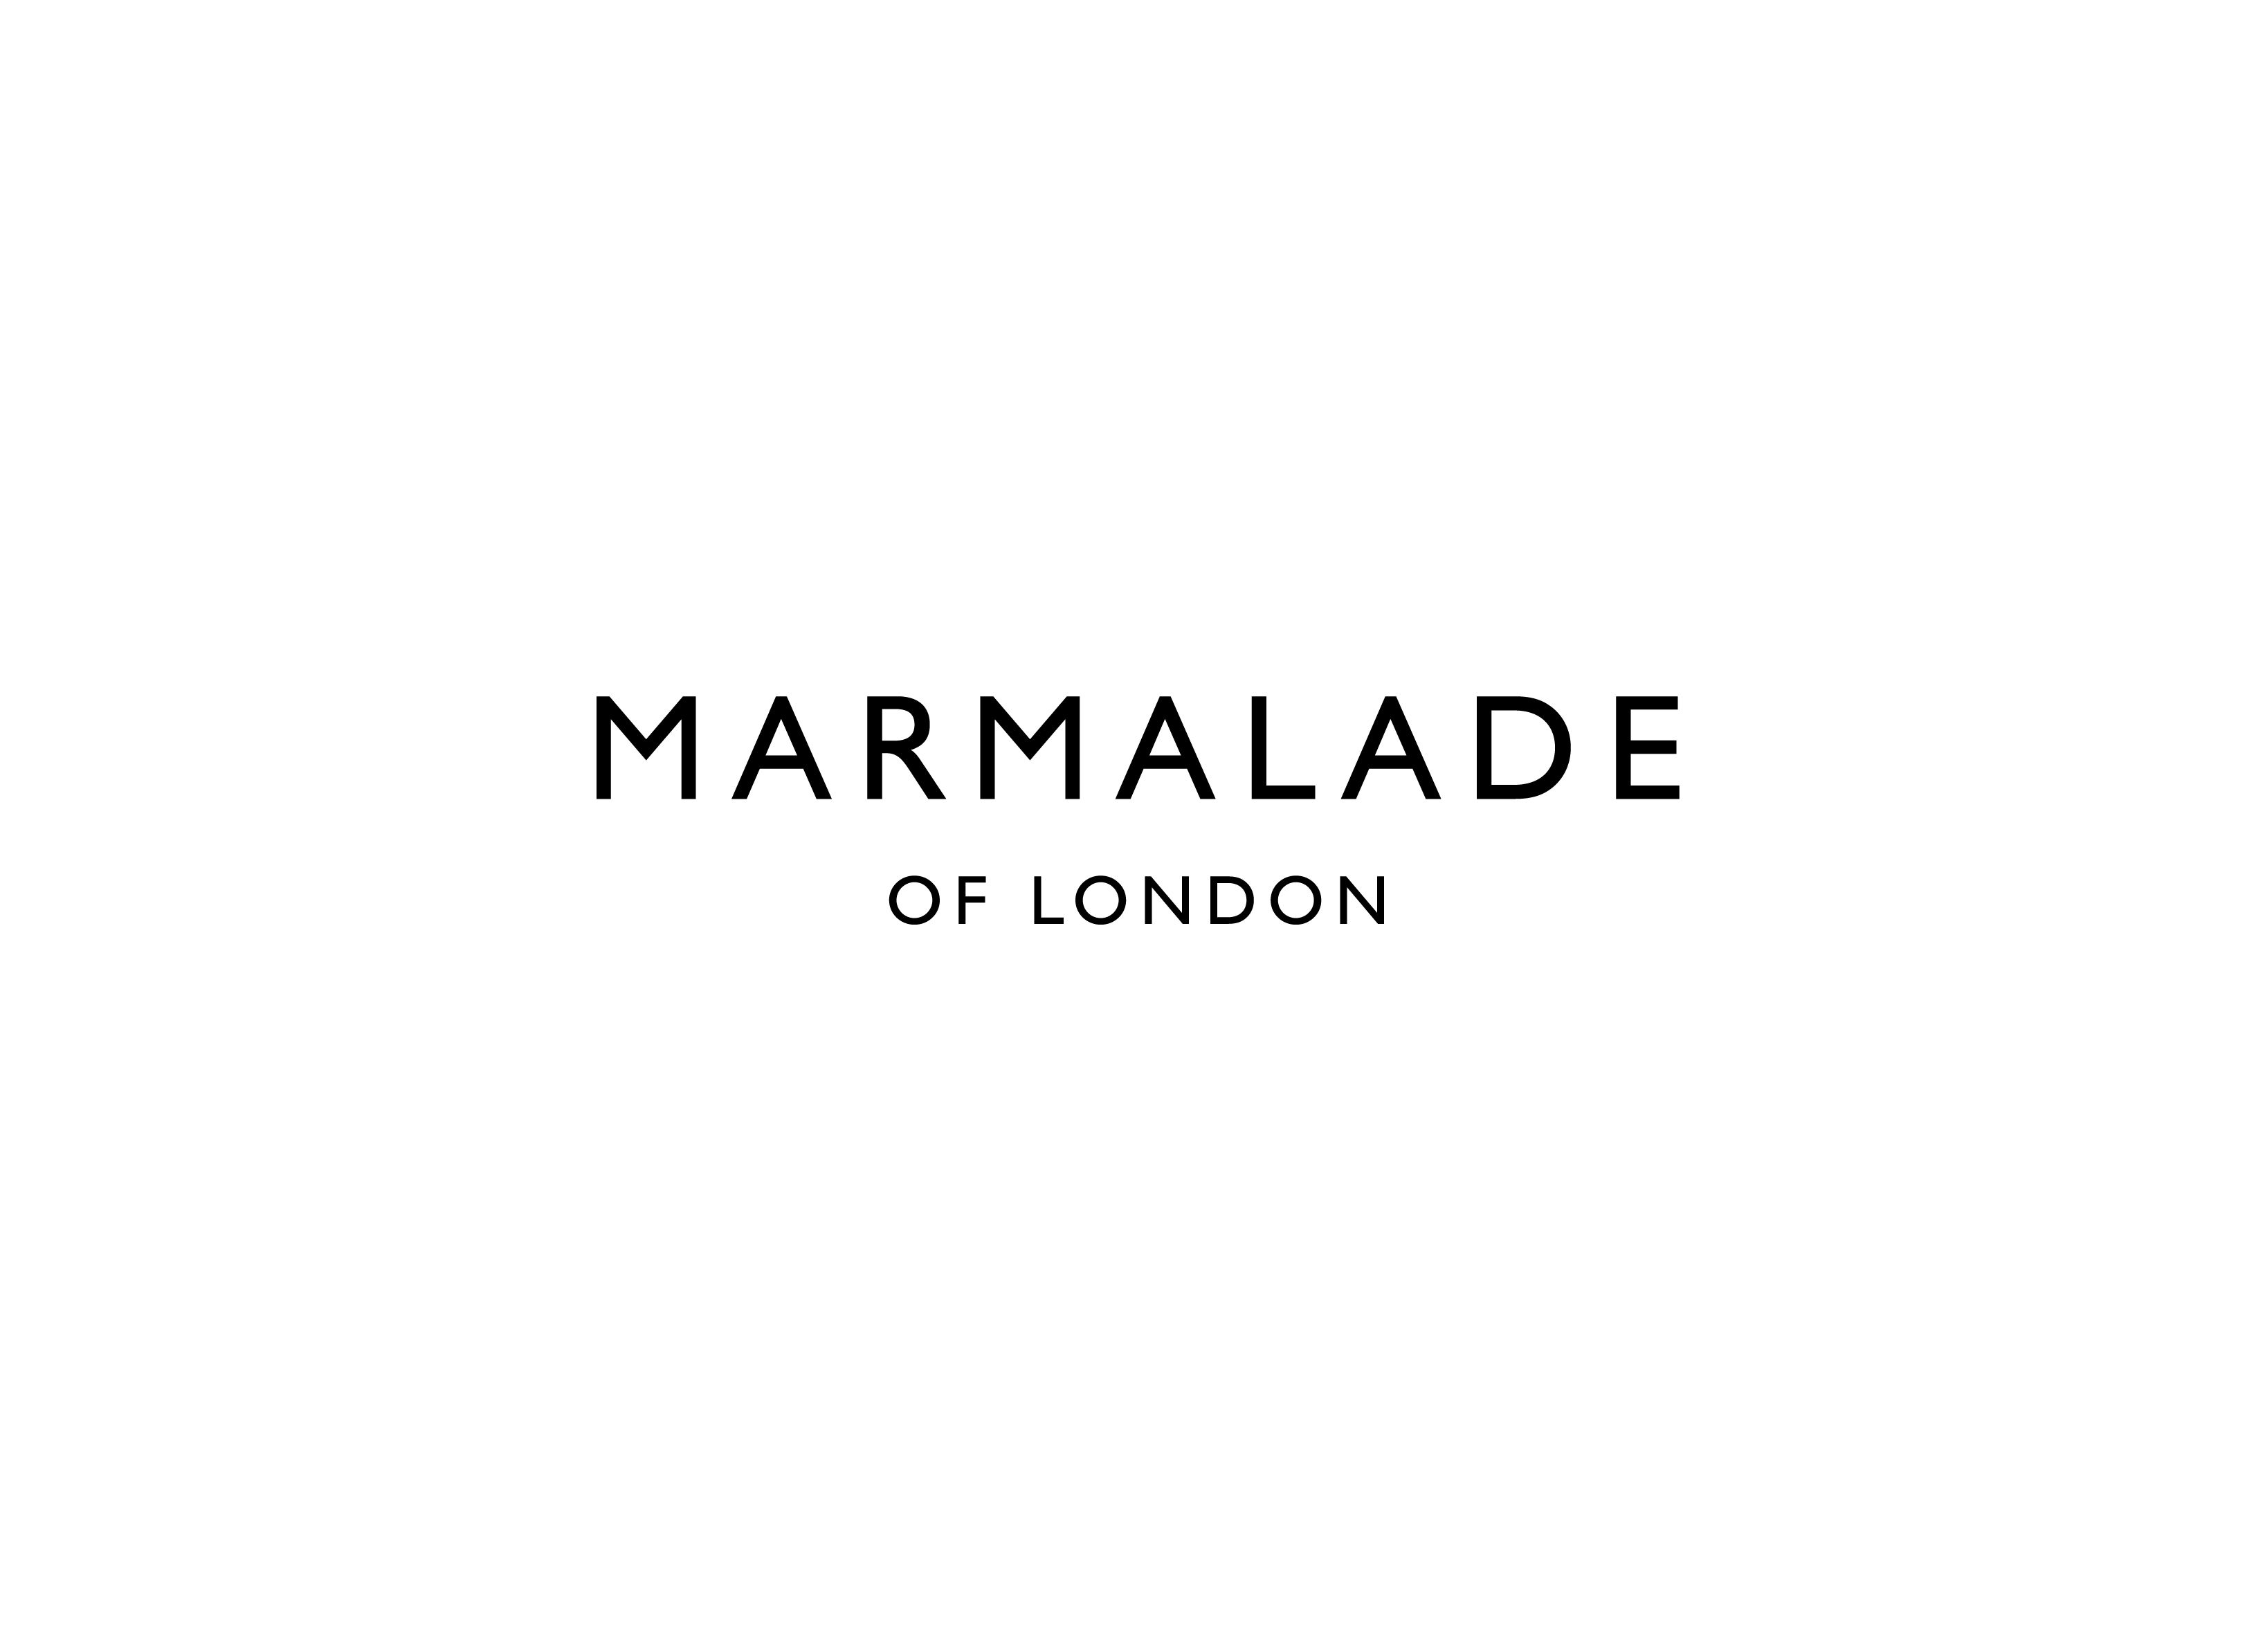 Marmalade of London Ltd